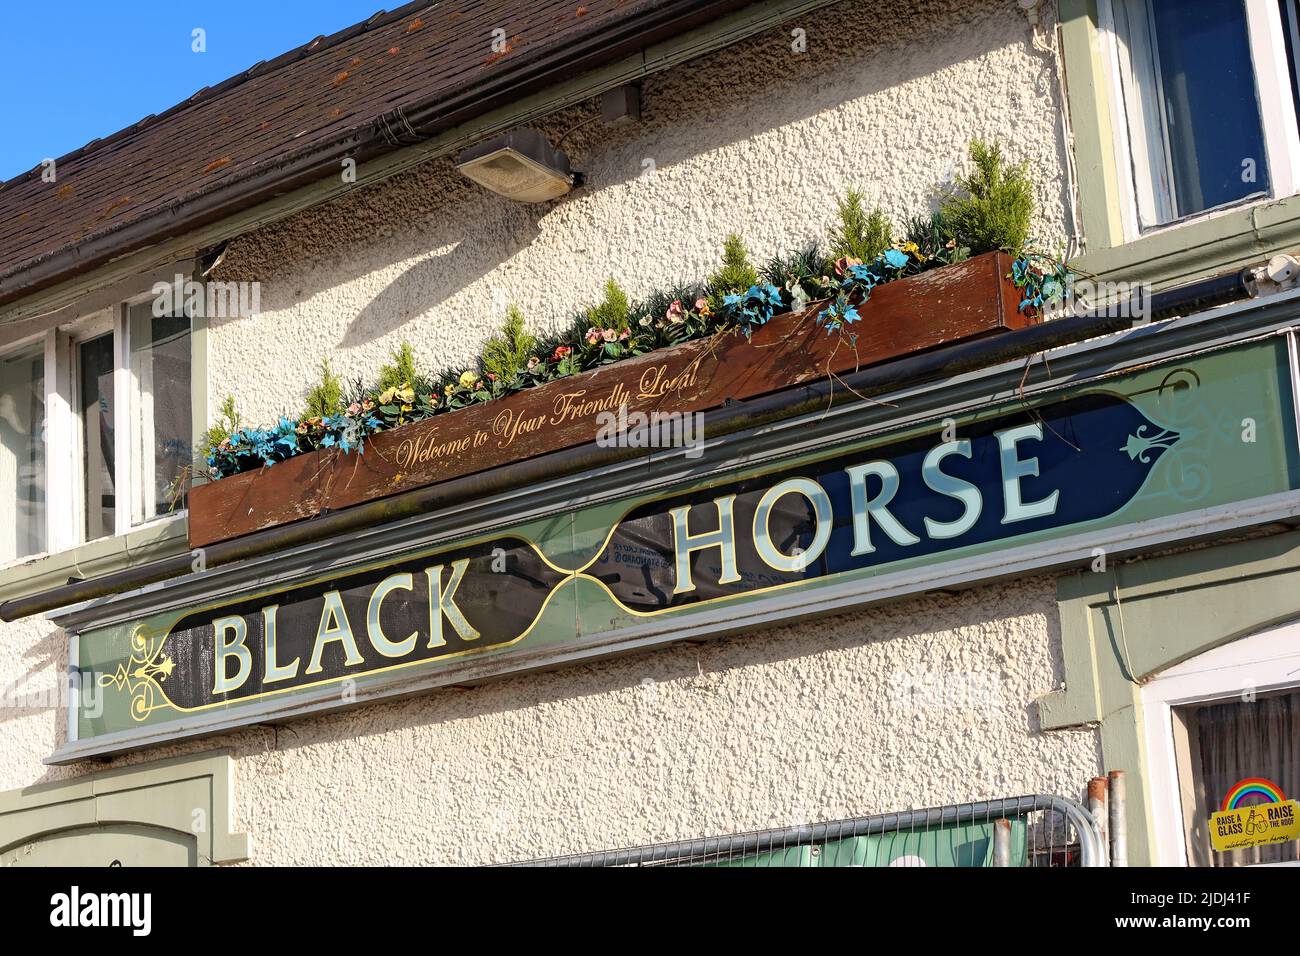 The Black Horse pub, Great Sankey, construit en 1894, 272 Old Liverpool Rd, Warrington, Cheshire, Angleterre, Royaume-Uni, WA5 1DZ Banque D'Images